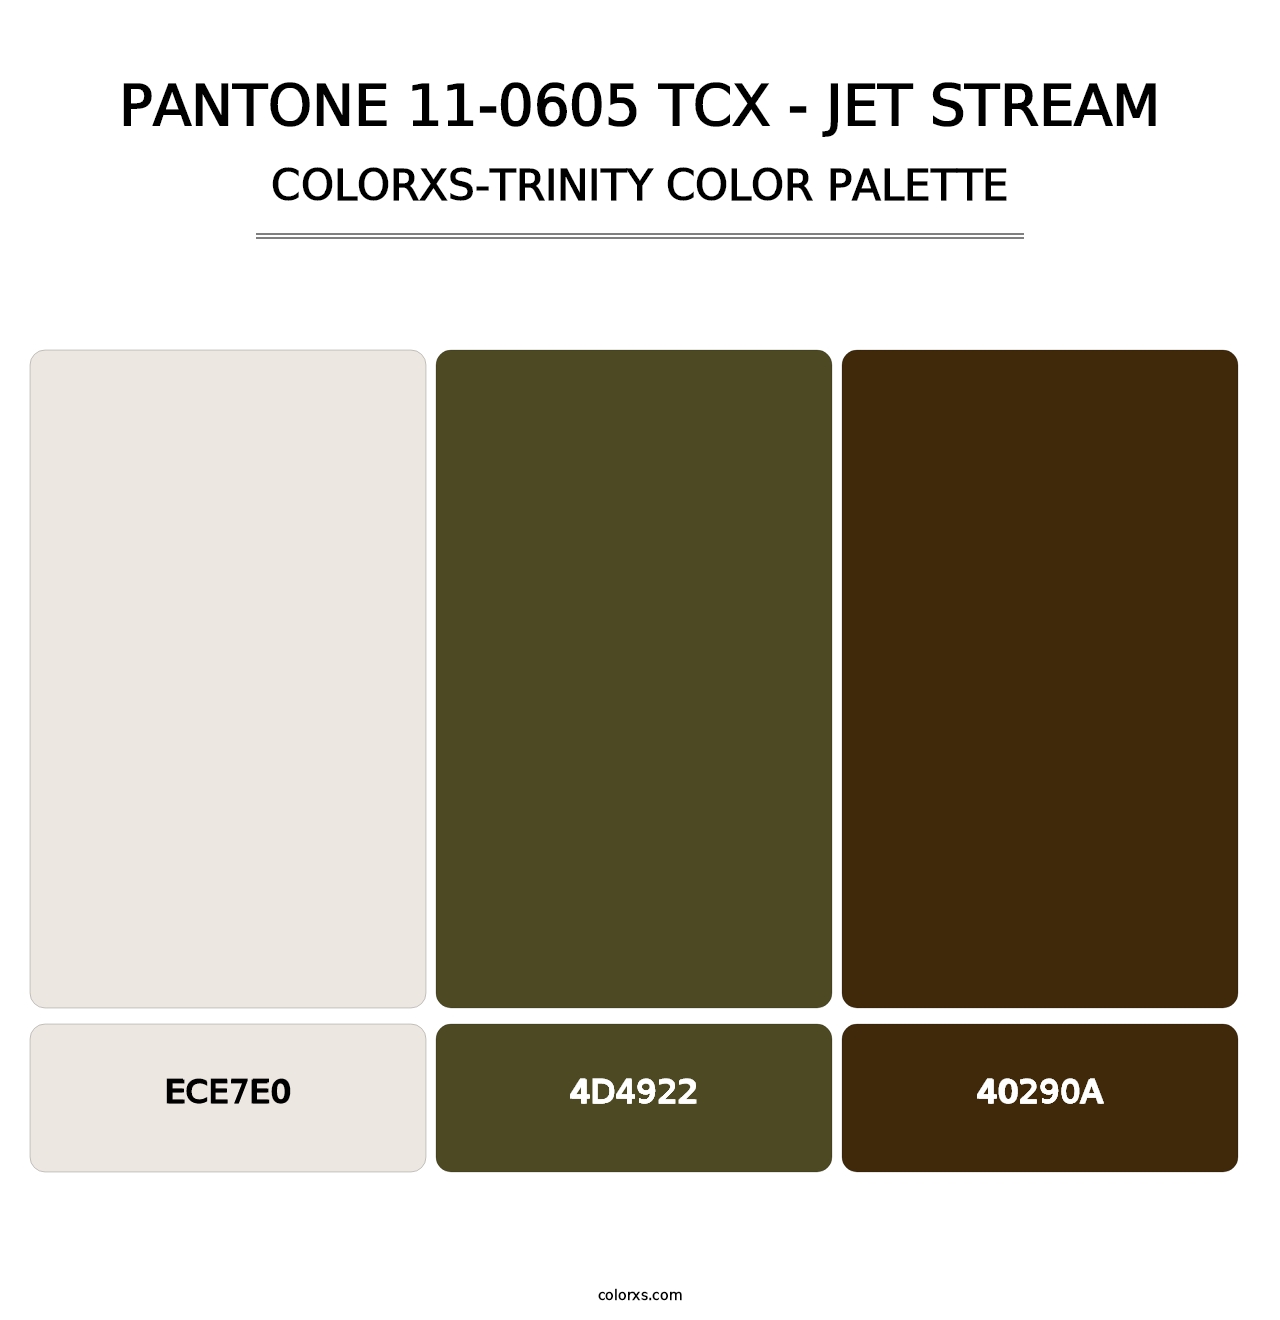 PANTONE 11-0605 TCX - Jet Stream - Colorxs Trinity Palette